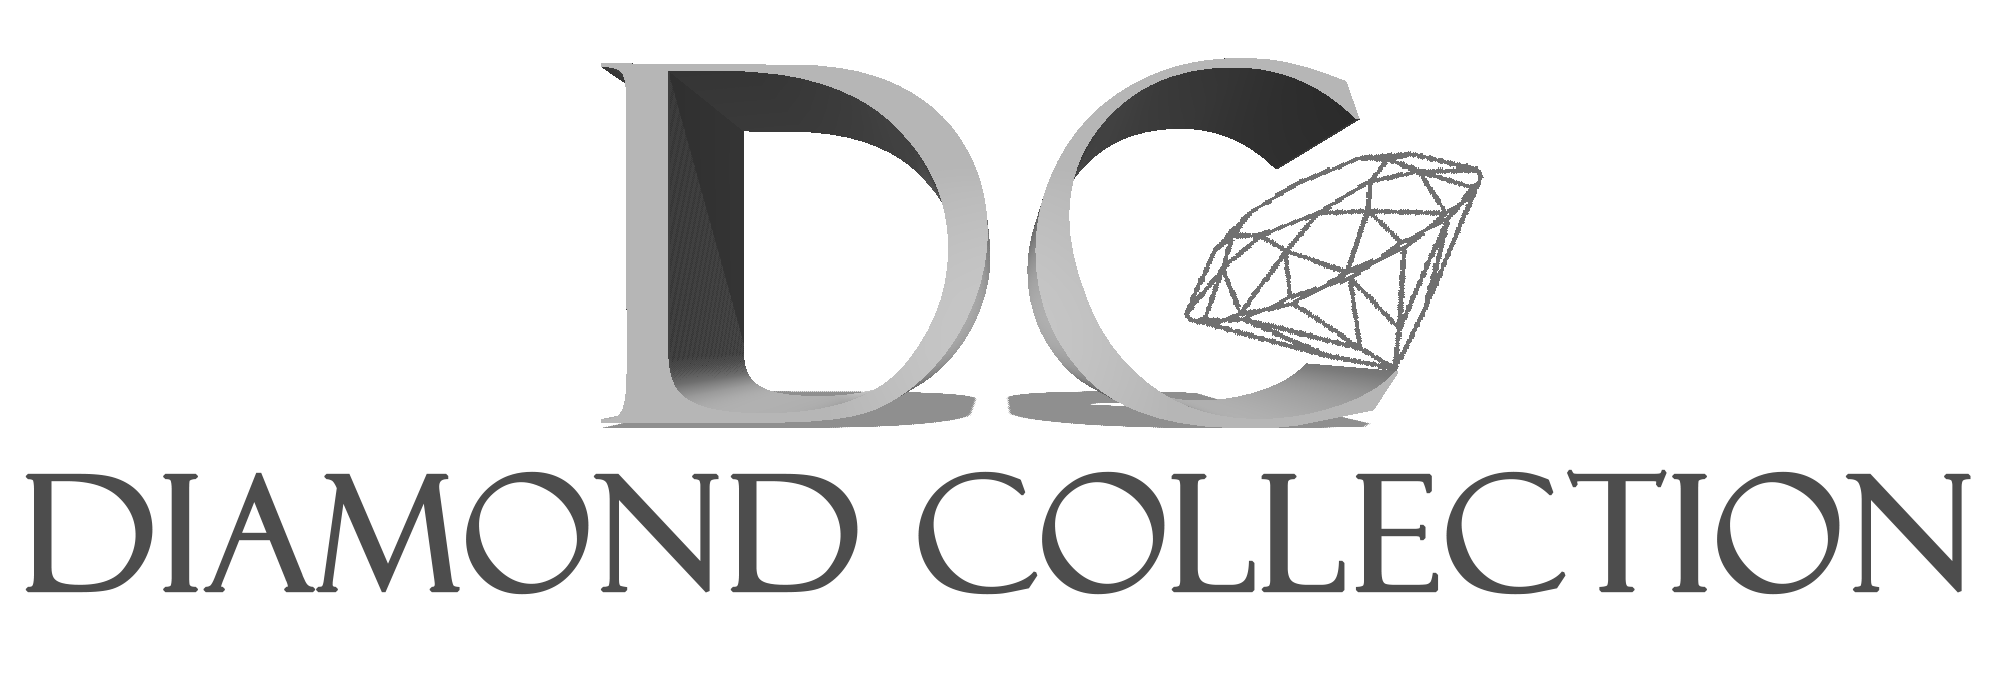 Newdiamondcollection